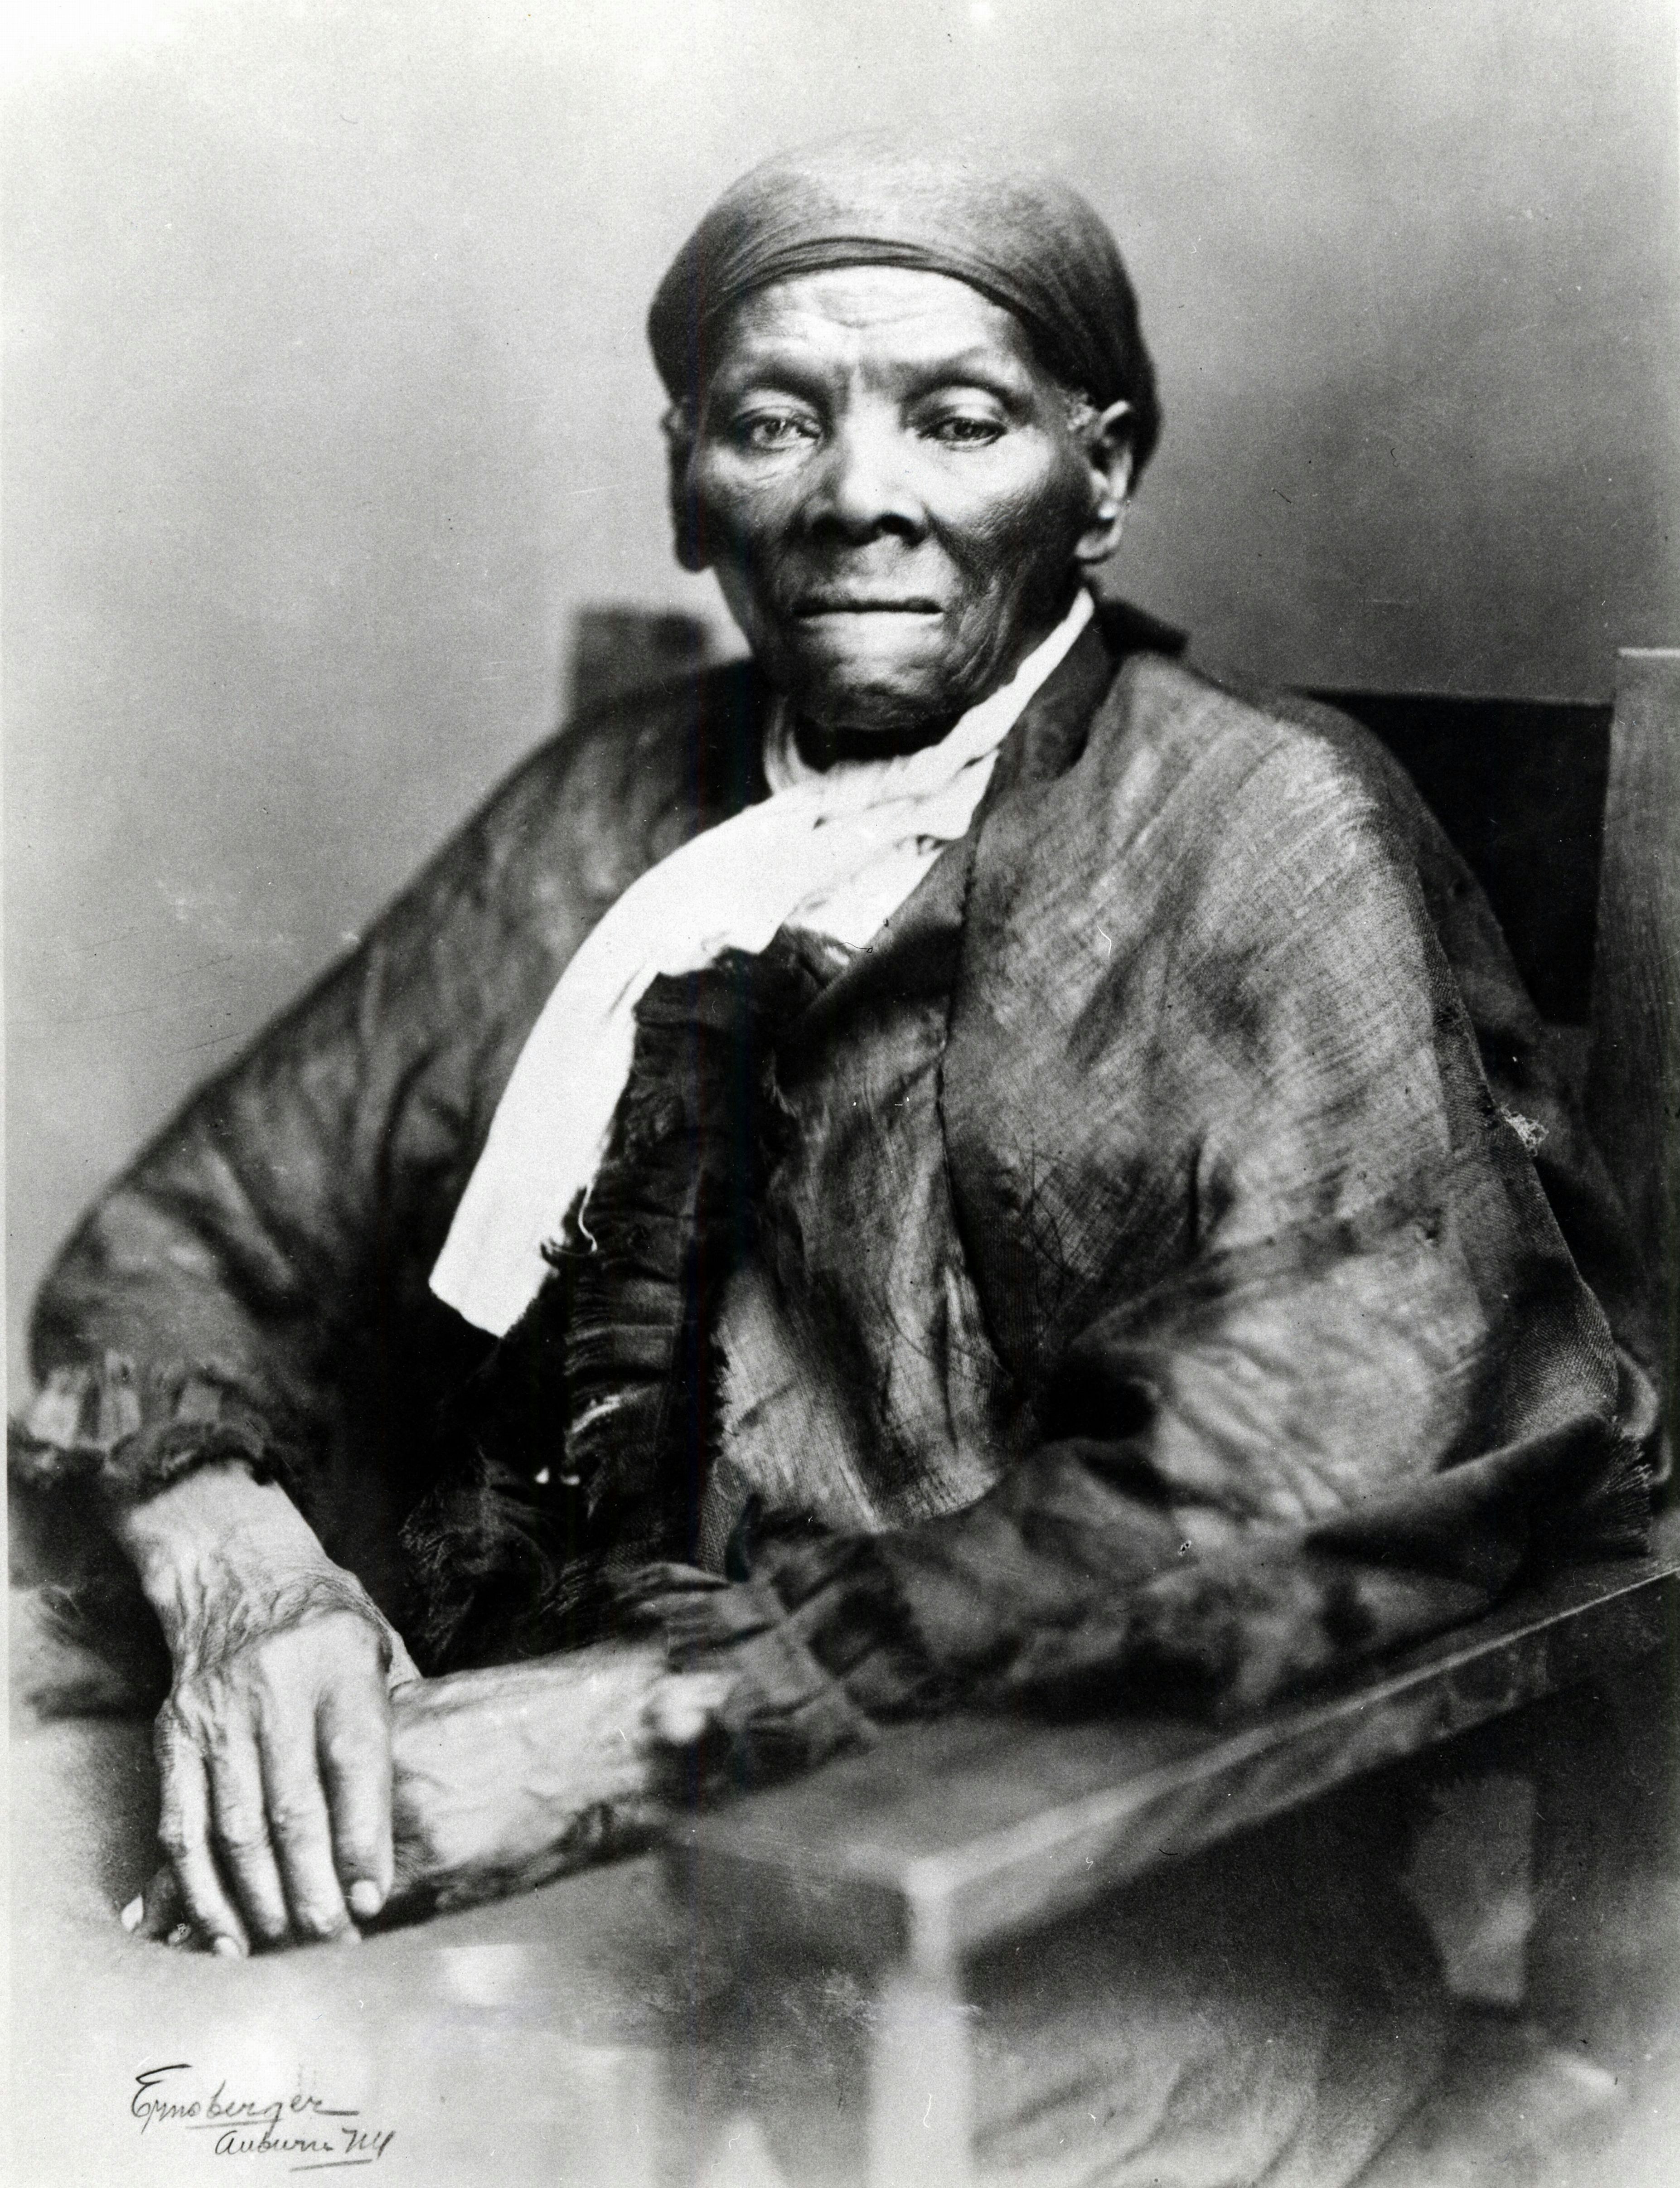 Archive photo of Harriet Tubman